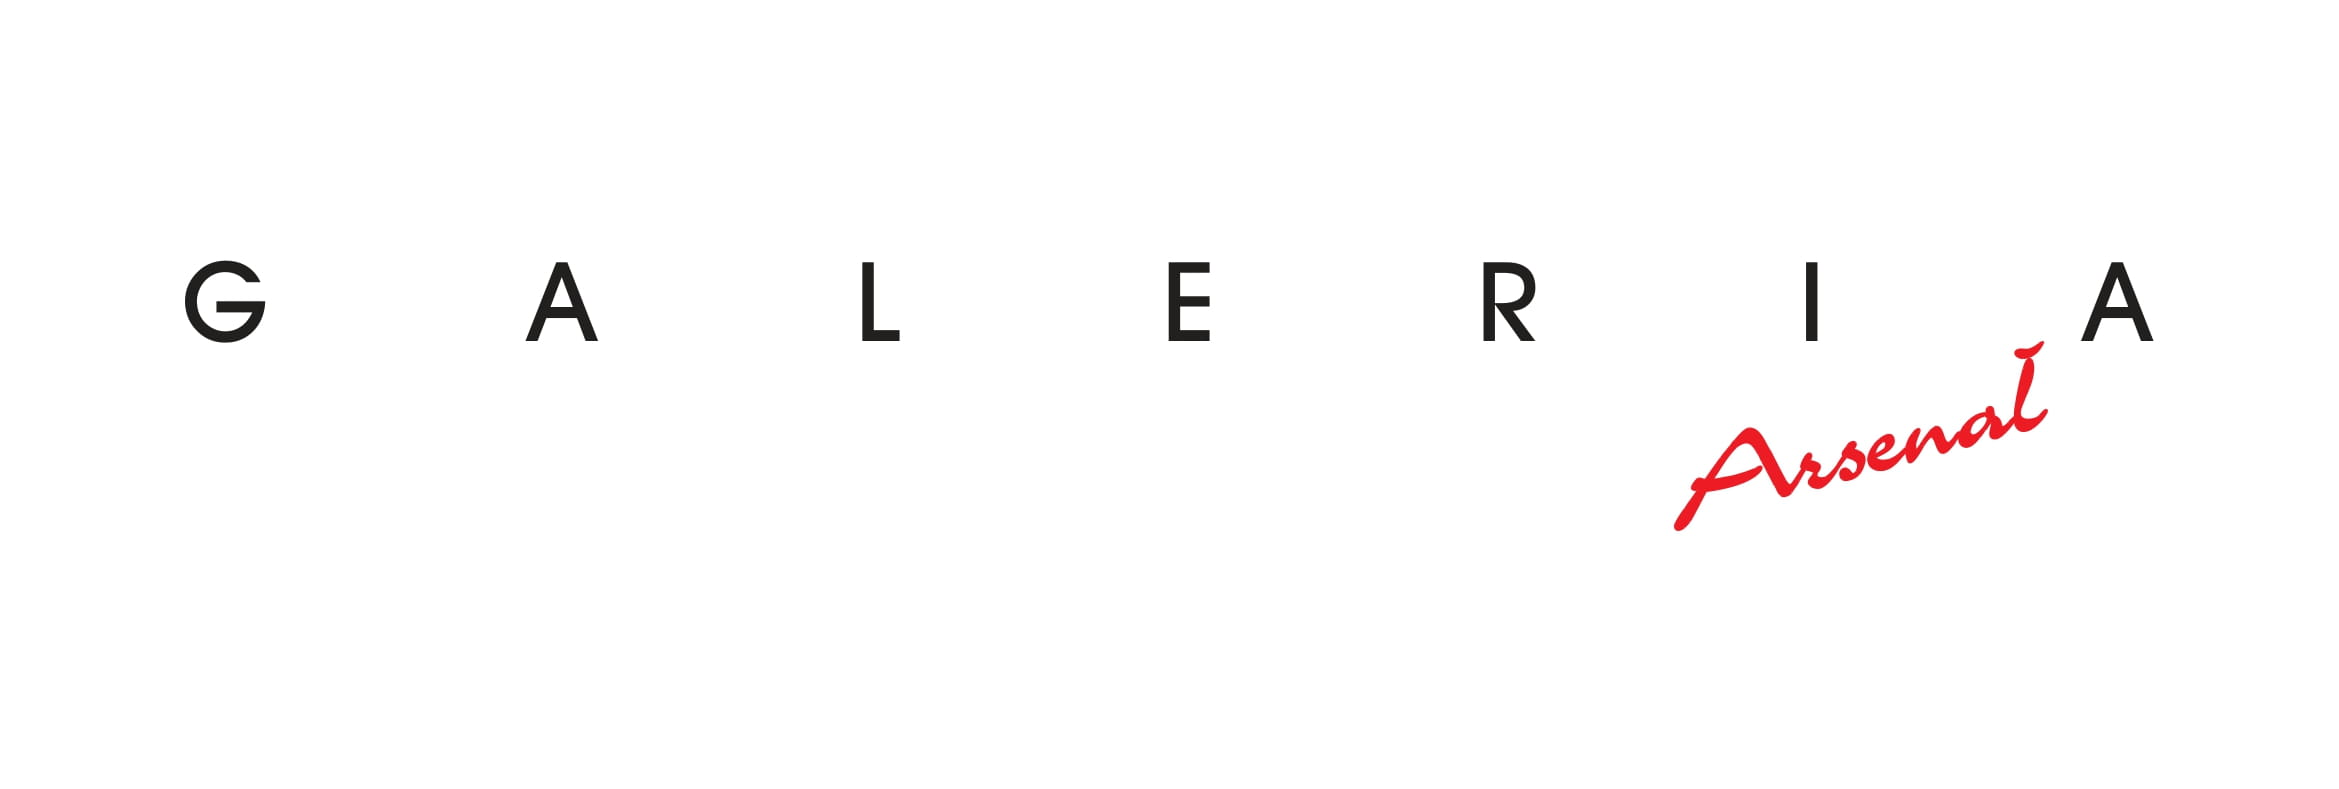 Galeria Arsenal logo